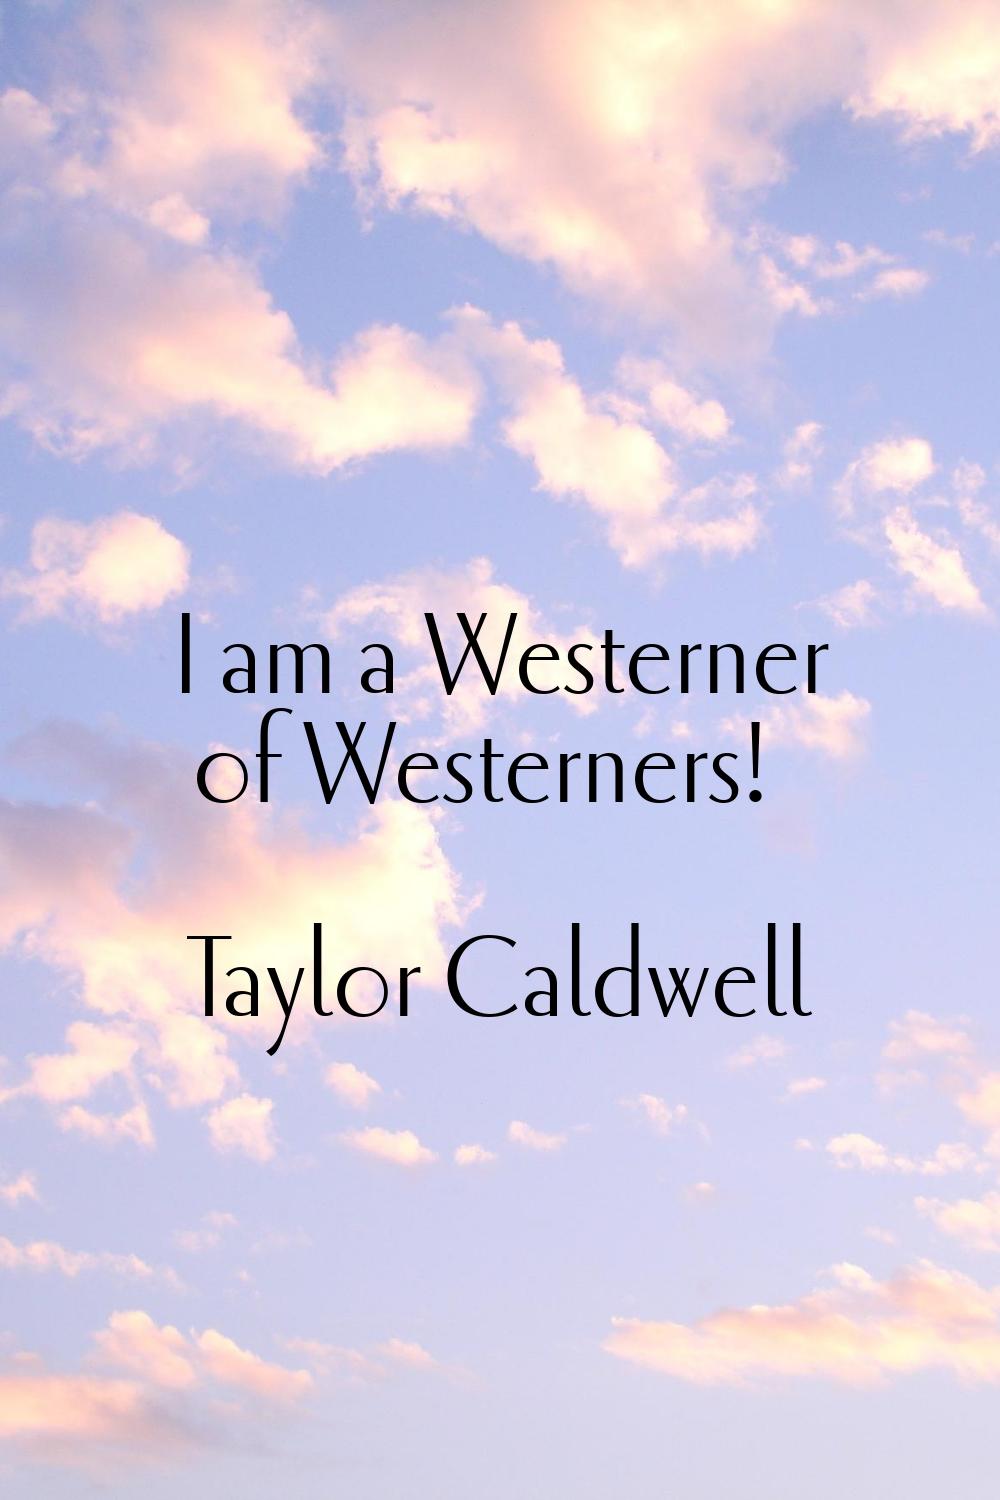 I am a Westerner of Westerners!